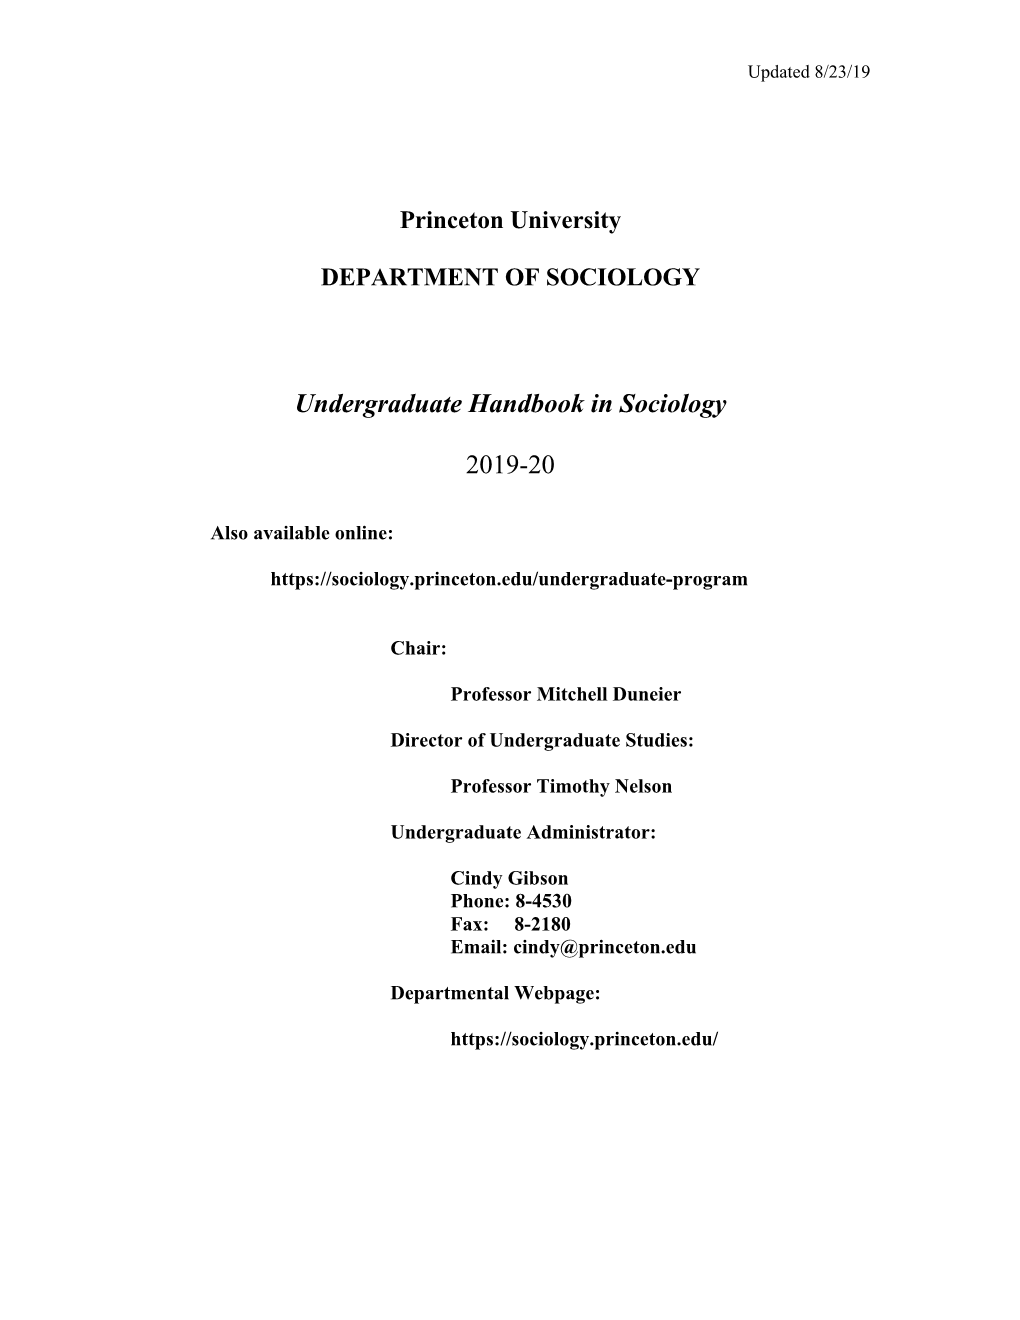 Undergraduate Handbook 201920